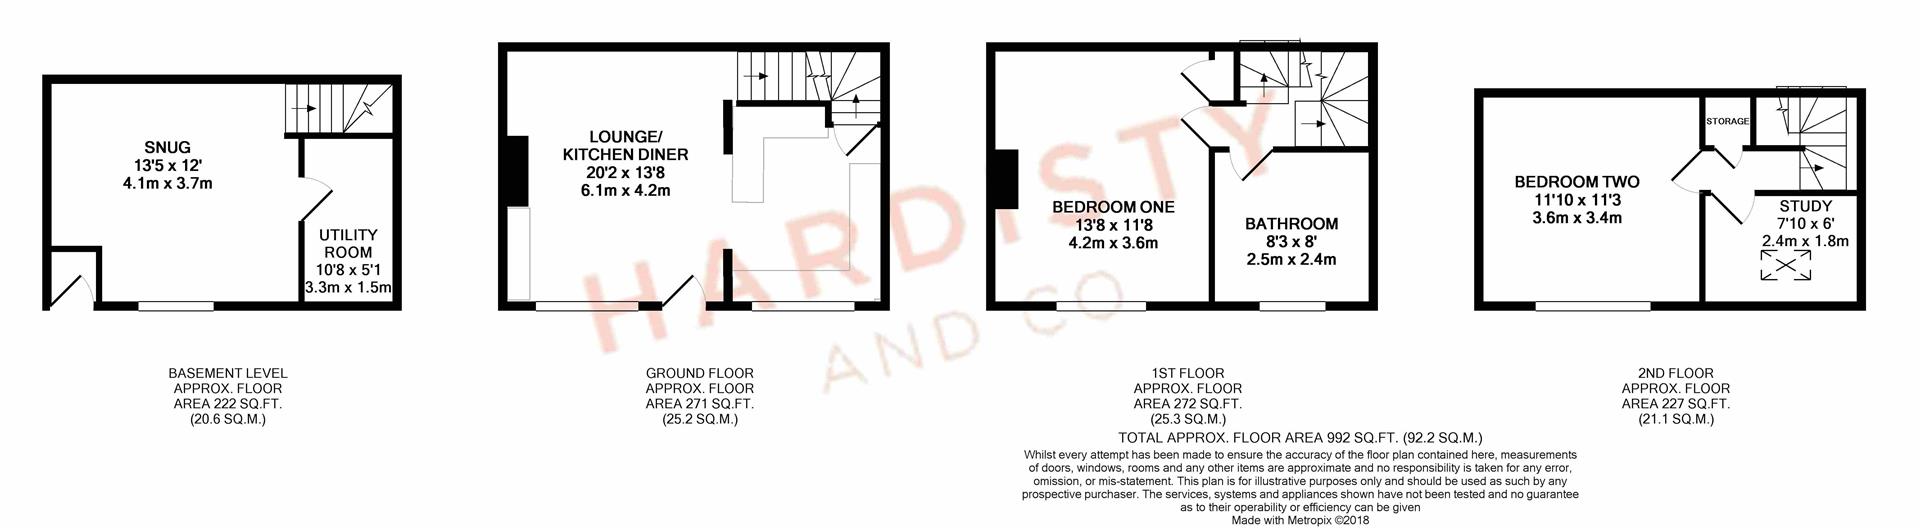 2 Bedrooms Terraced house for sale in Warrels Place, Bramley, Leeds LS13